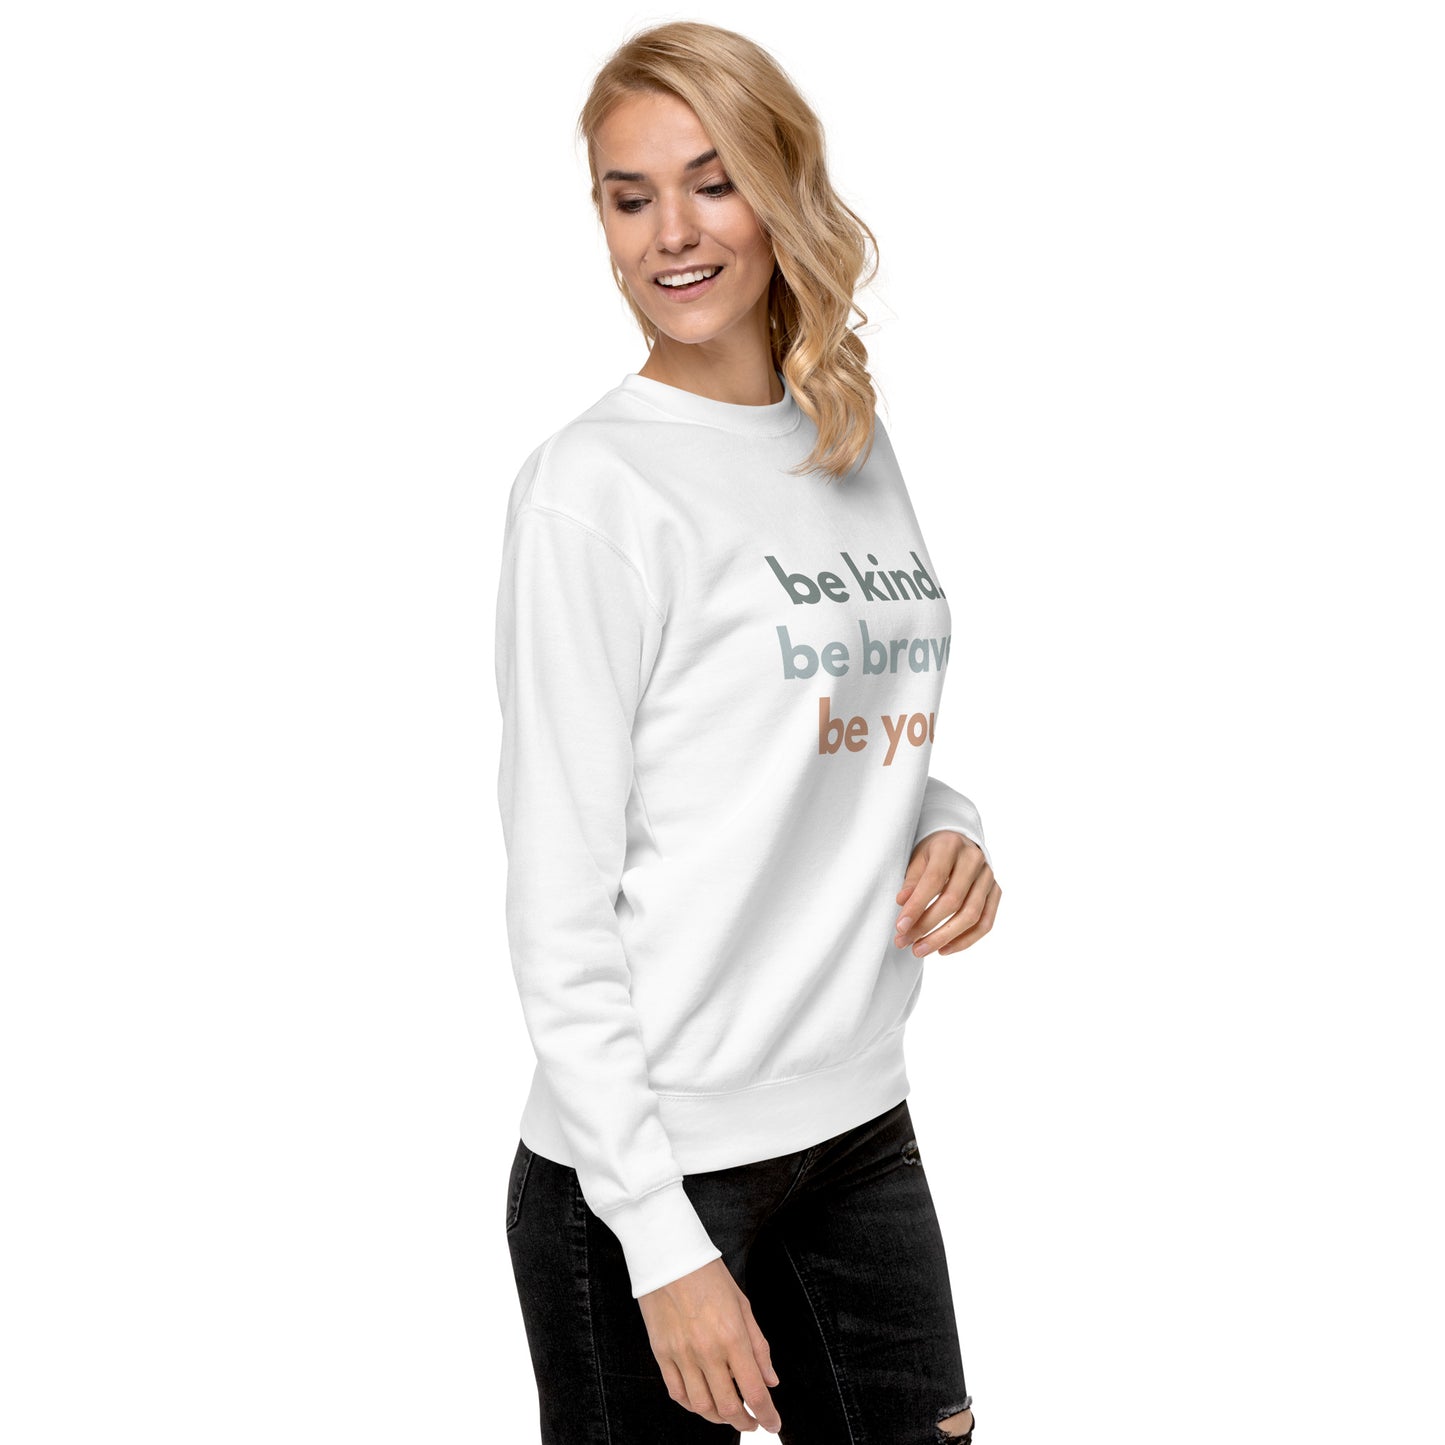 Unisex Premium Sweatshirt - be brave. be kind. be you.